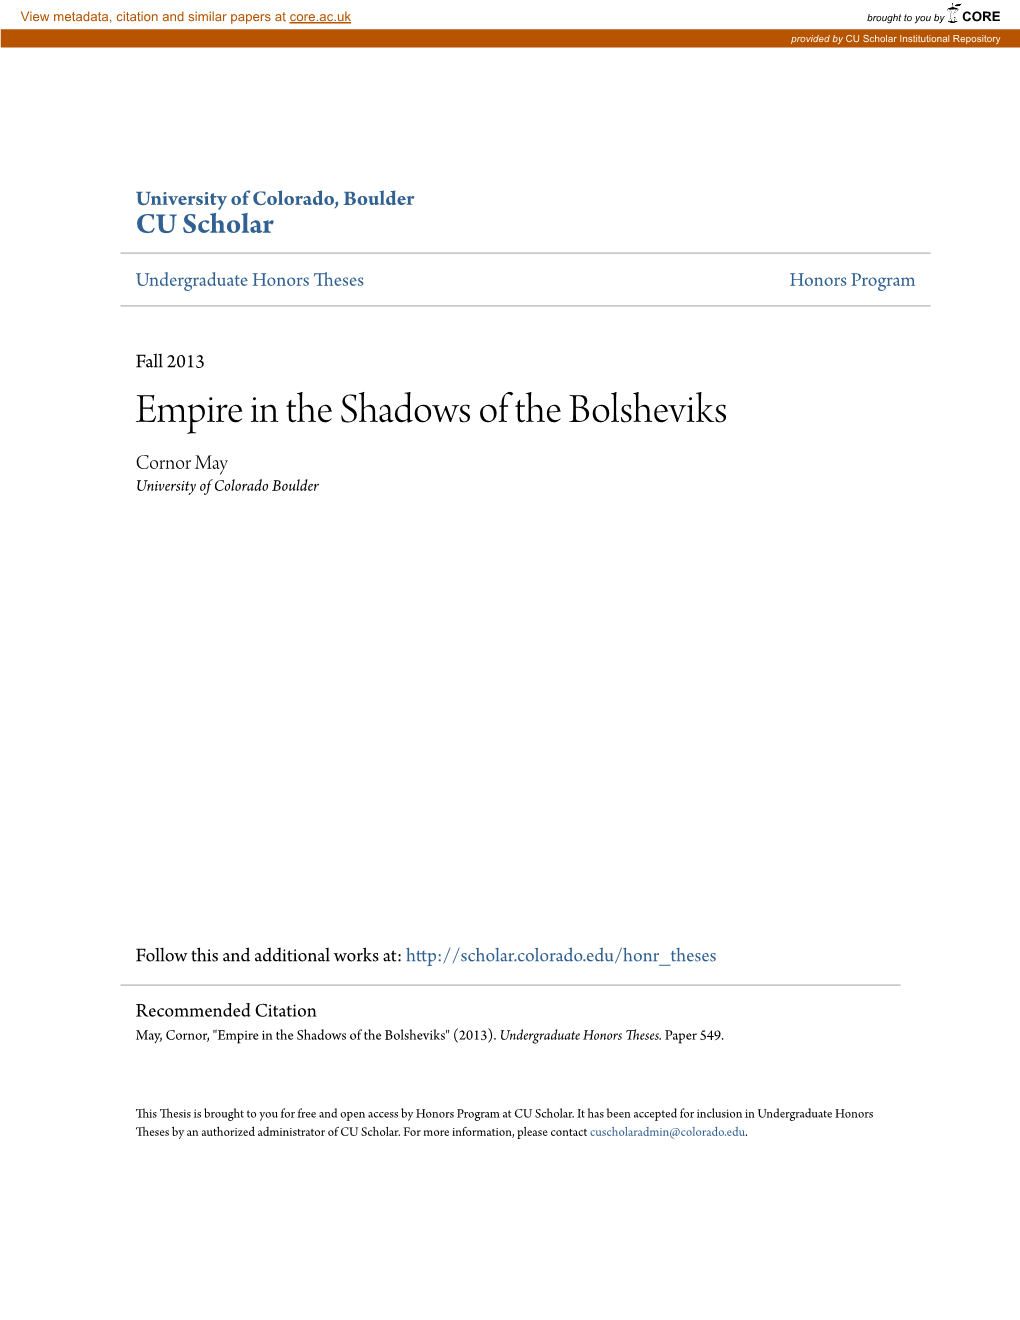 Empire in the Shadows of the Bolsheviks Cornor May University of Colorado Boulder